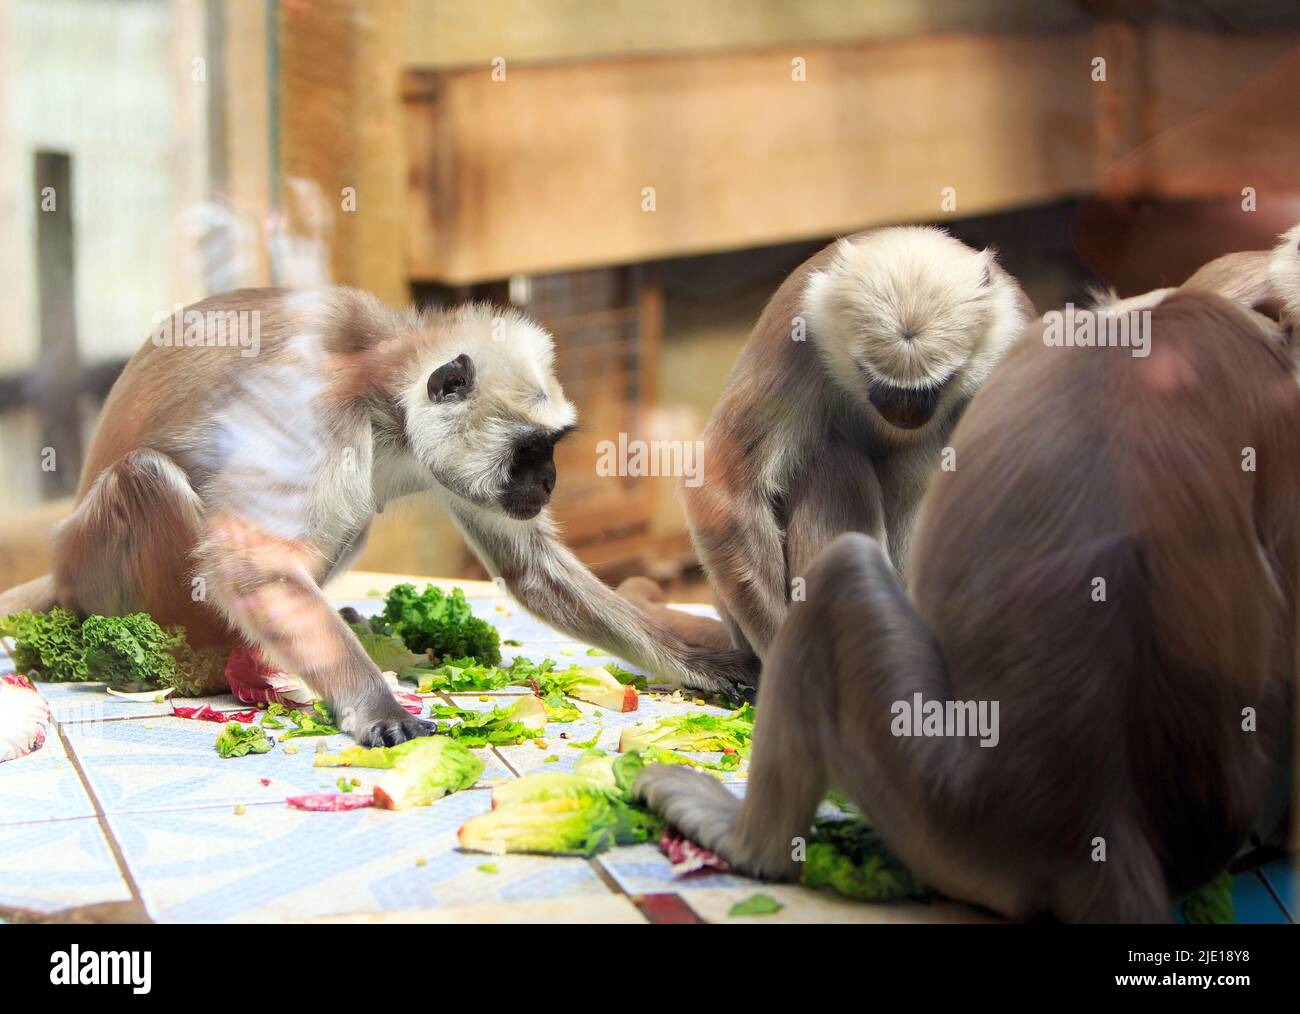 Monkey's feeding on a table.  Taken through a glass viewing window. Stock Photo